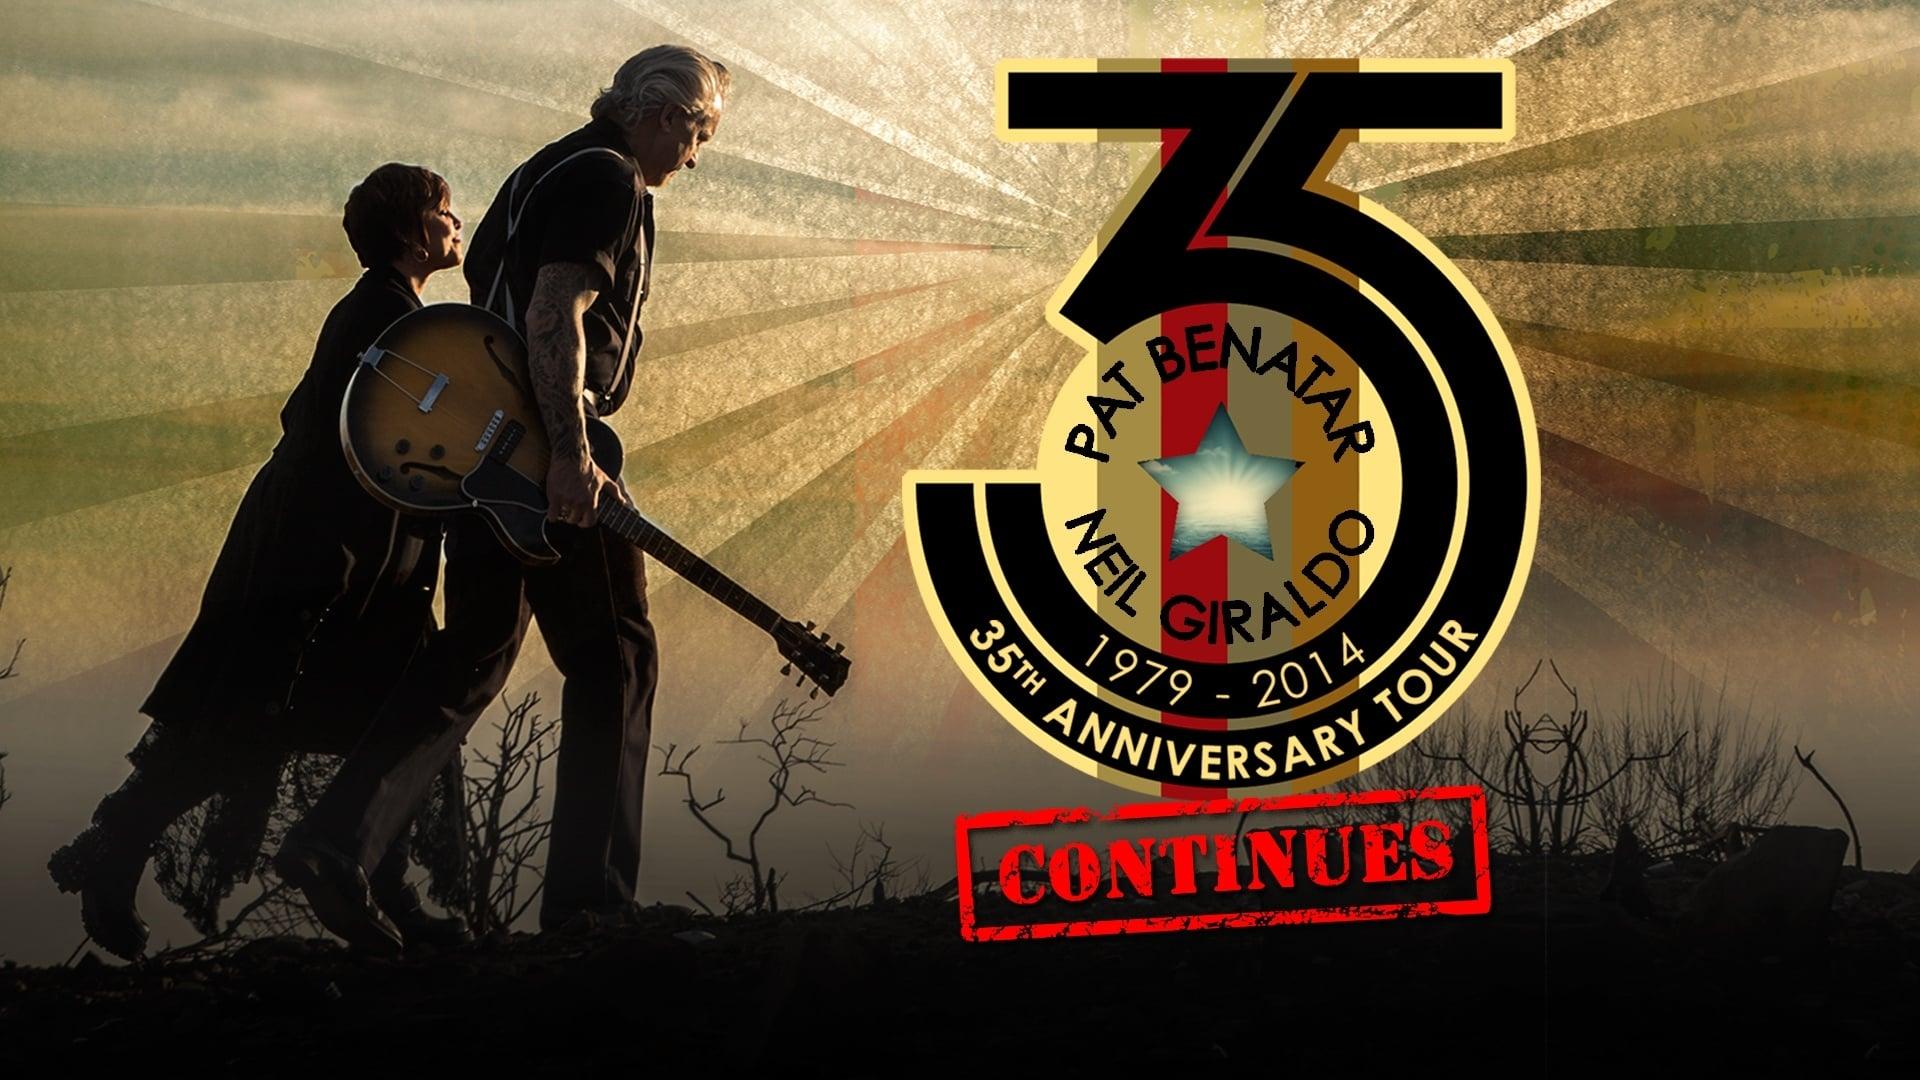 Pat Benatar and Neil Giraldo 35th Anniversary Tour backdrop